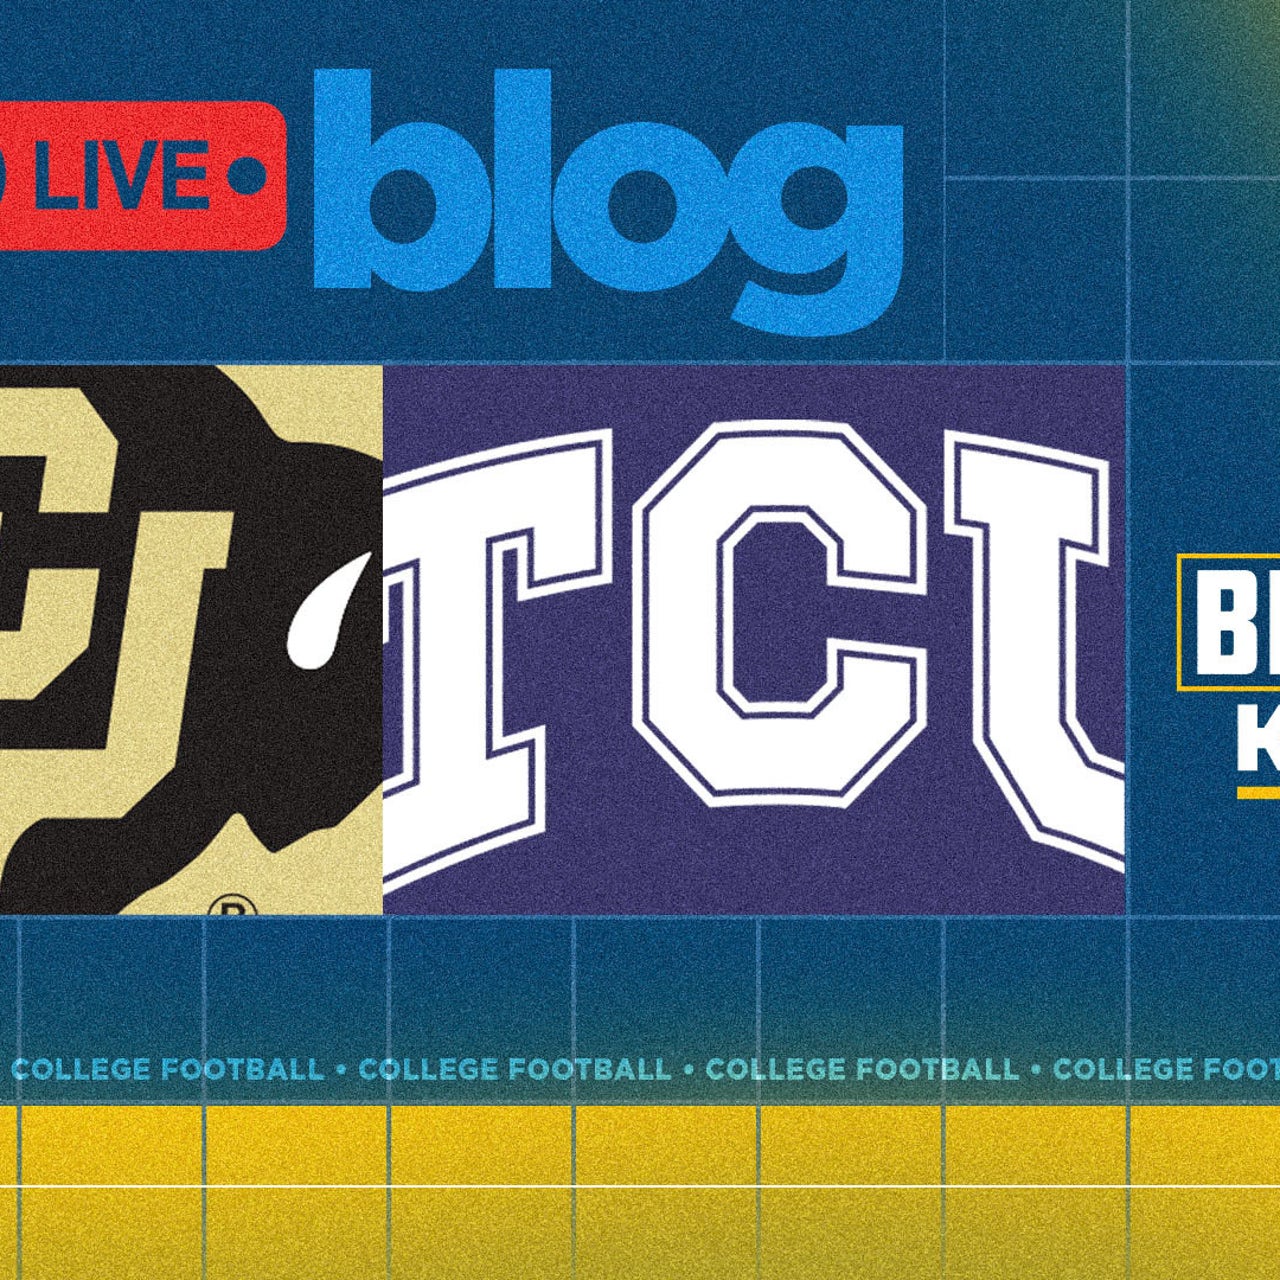 Big Noon Live Colorado stuns TCU in Deion Sanders debut FOX Sports